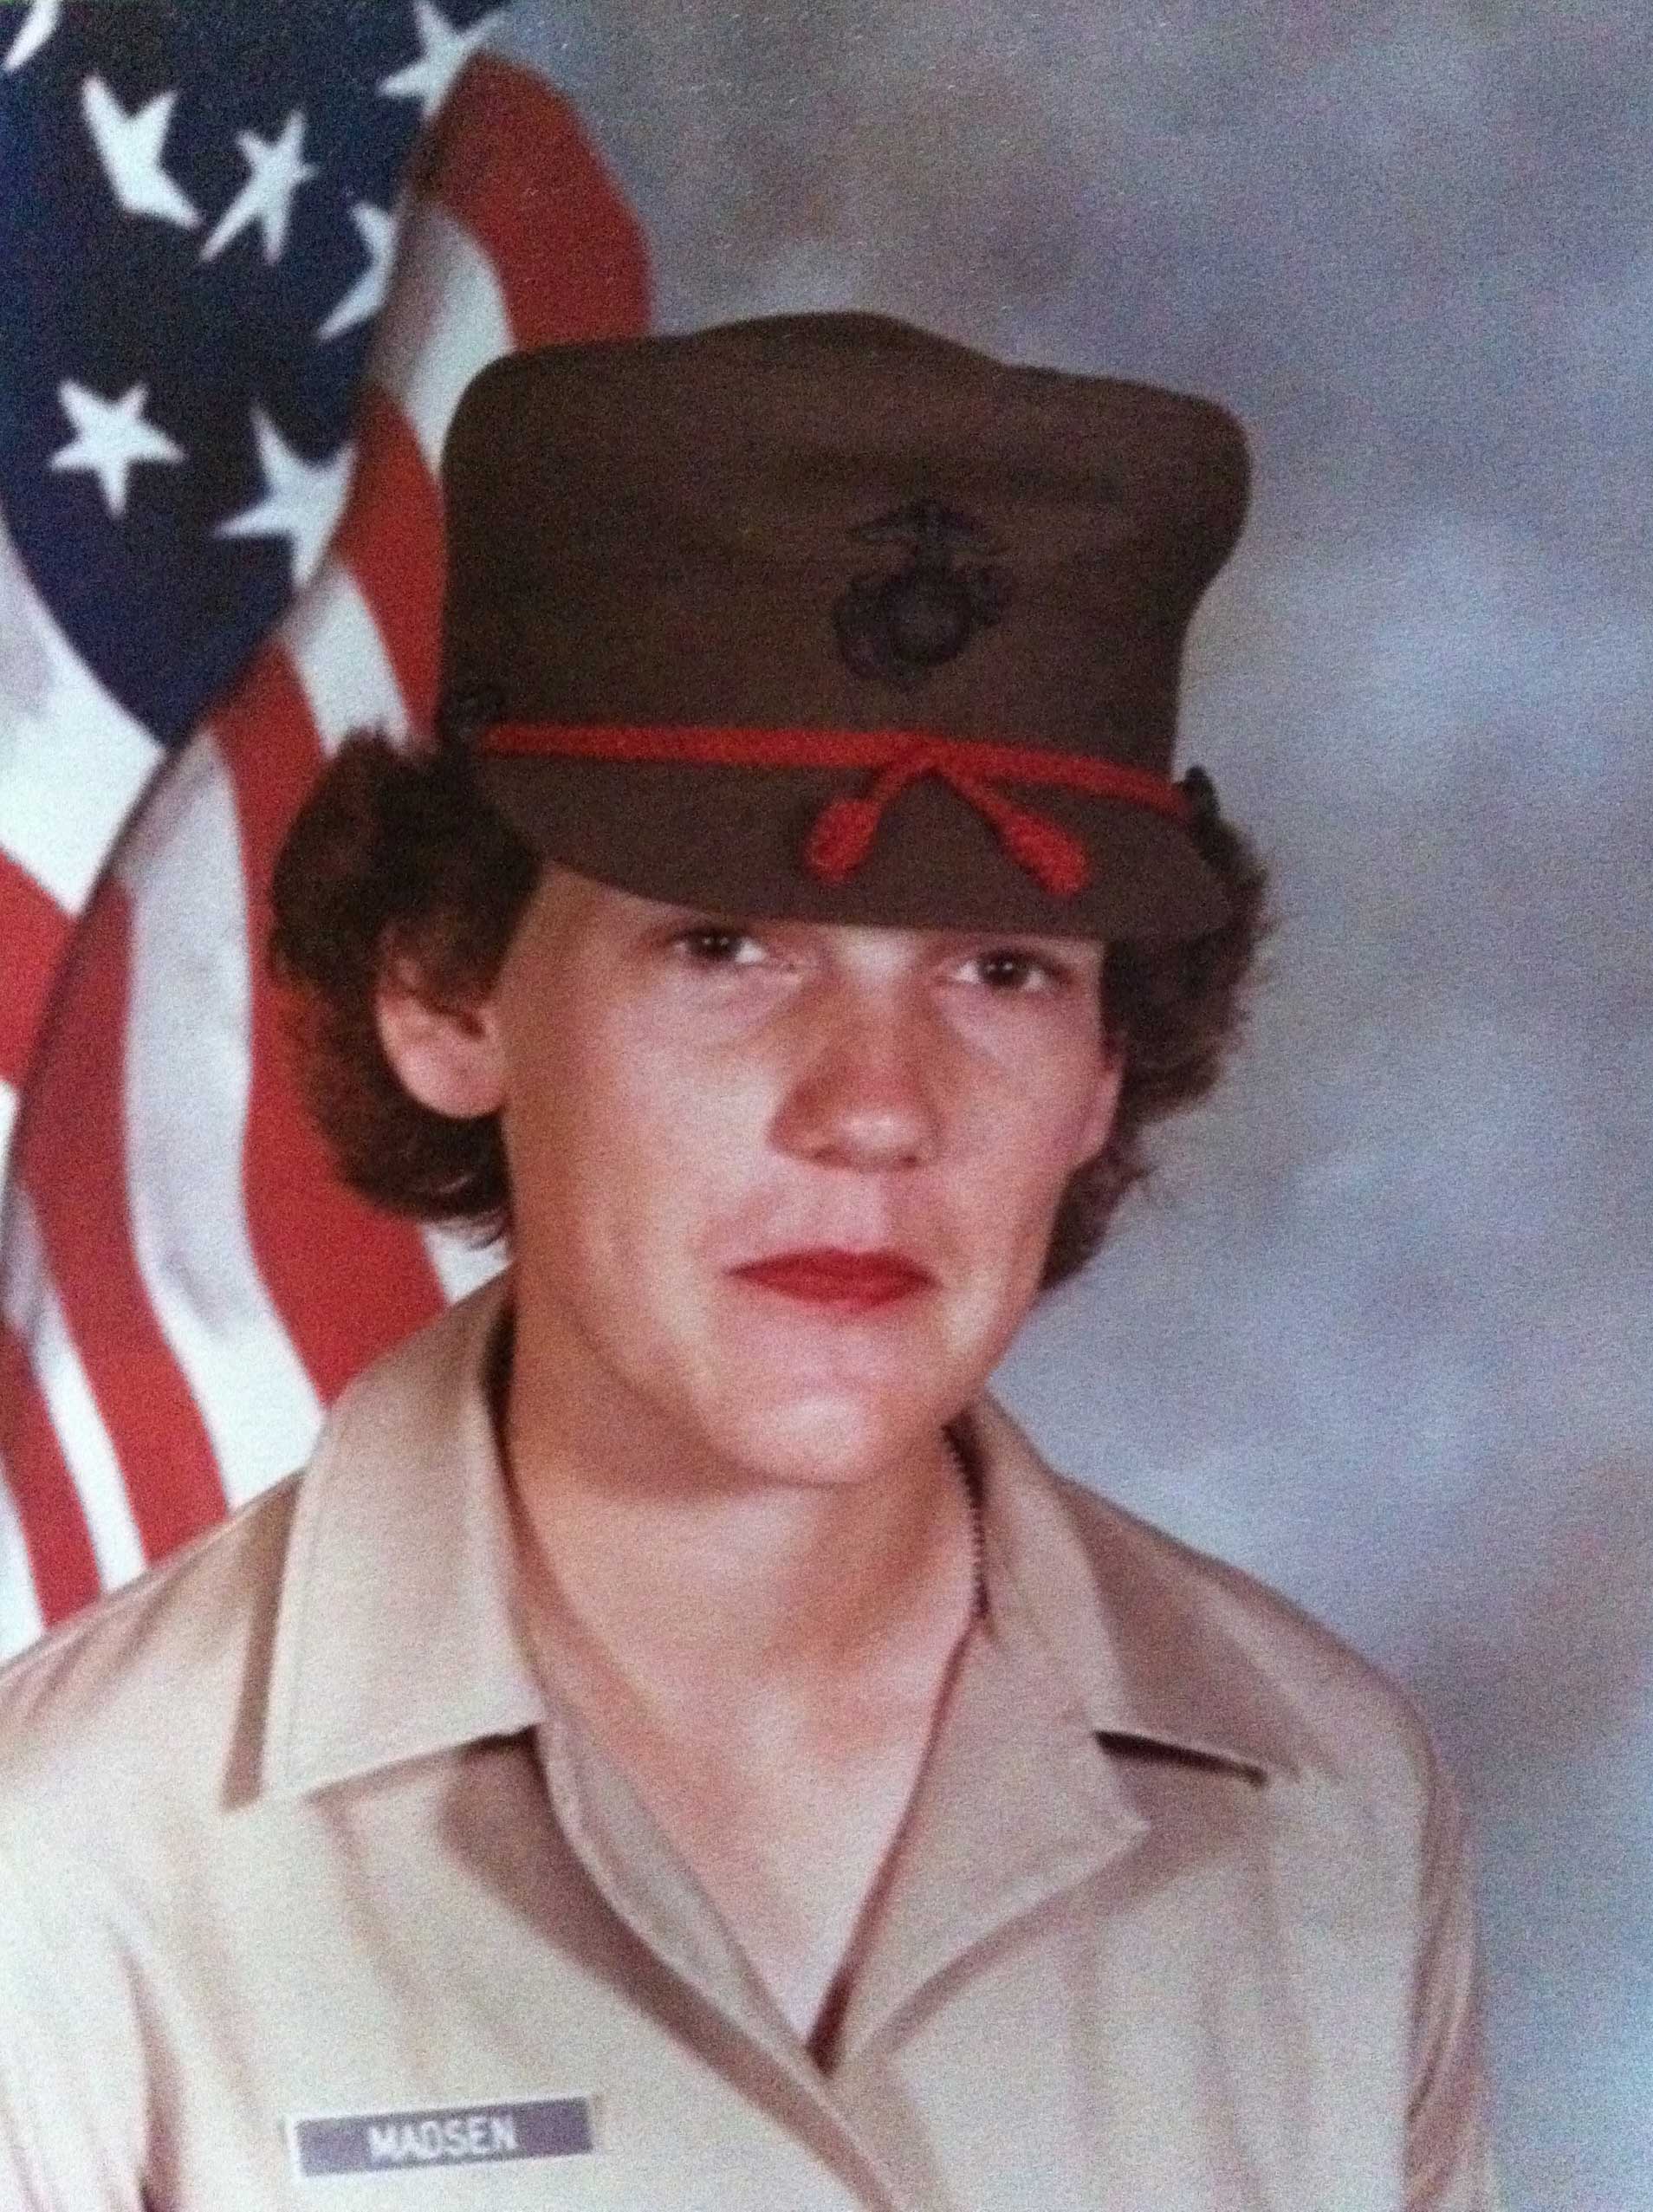 Angela Madsen's platoon yearbook photo, which was taken at Marine Corps Recruit Depot Parris Island in South Carolina, 1979. (Courtesy Angela Madsen)